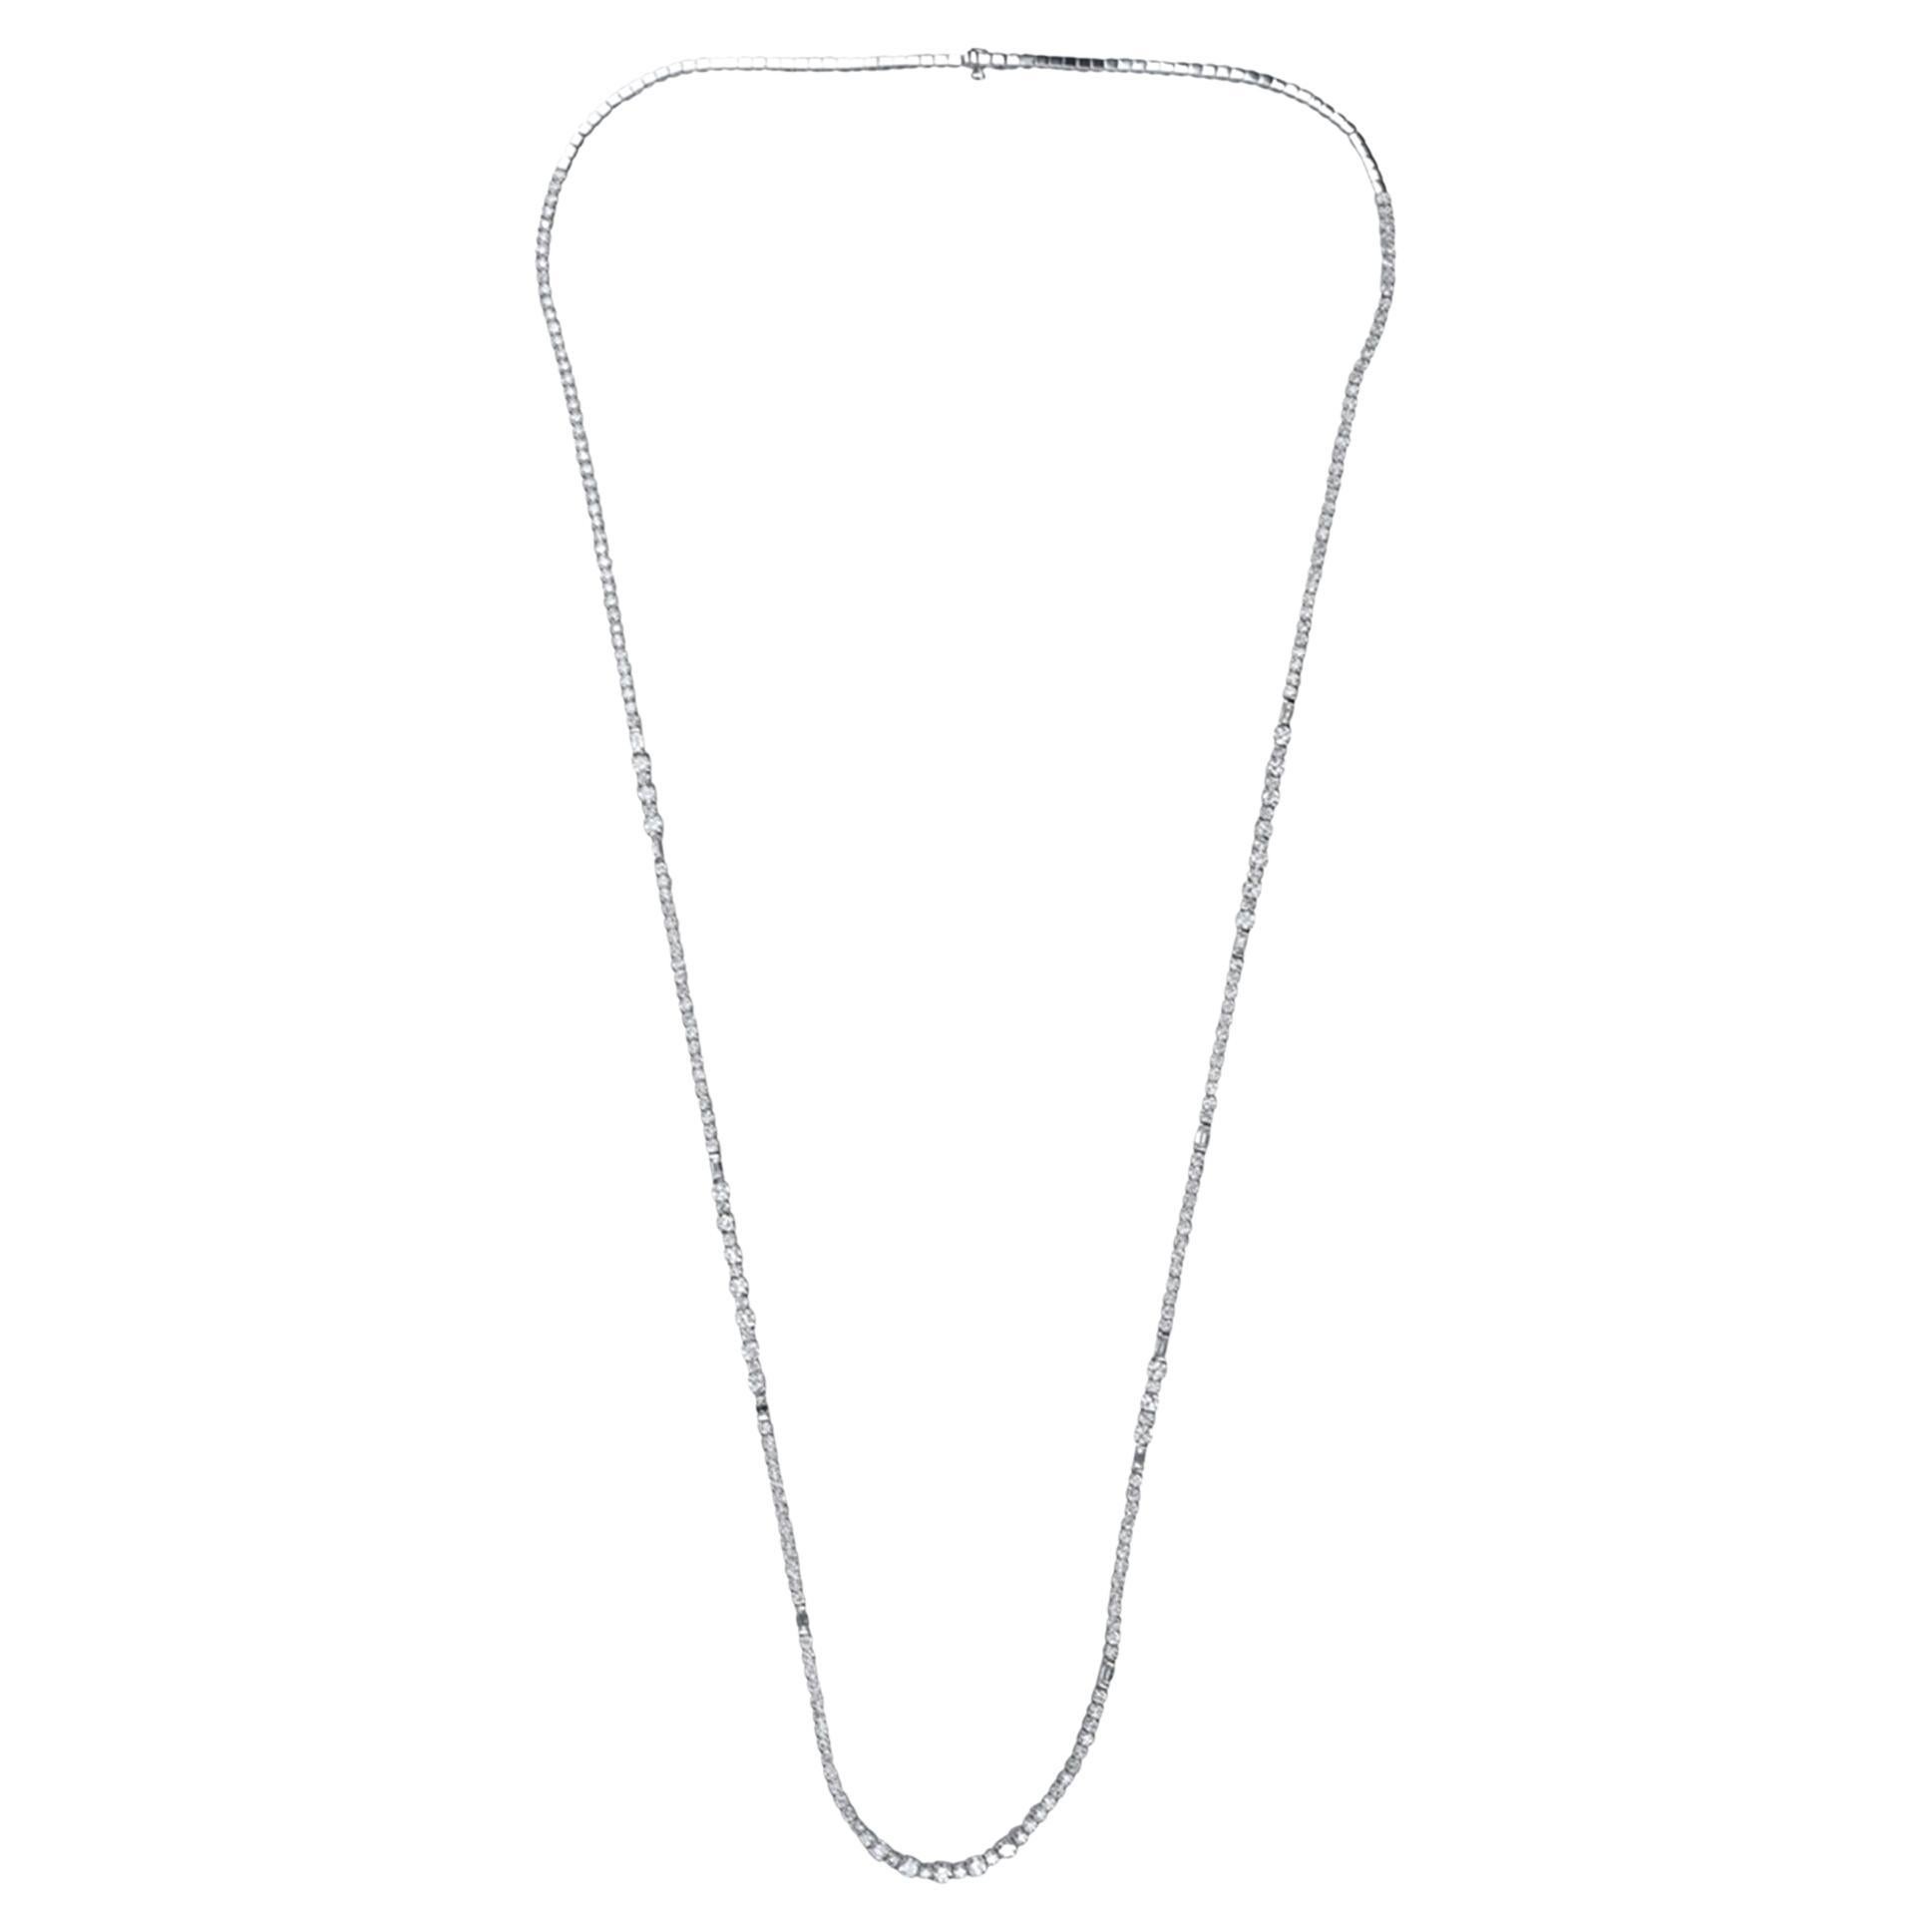 8.42 Carat SI Clarity HI Color Diamond Tennis Chain Necklace 18 Karat White Gold